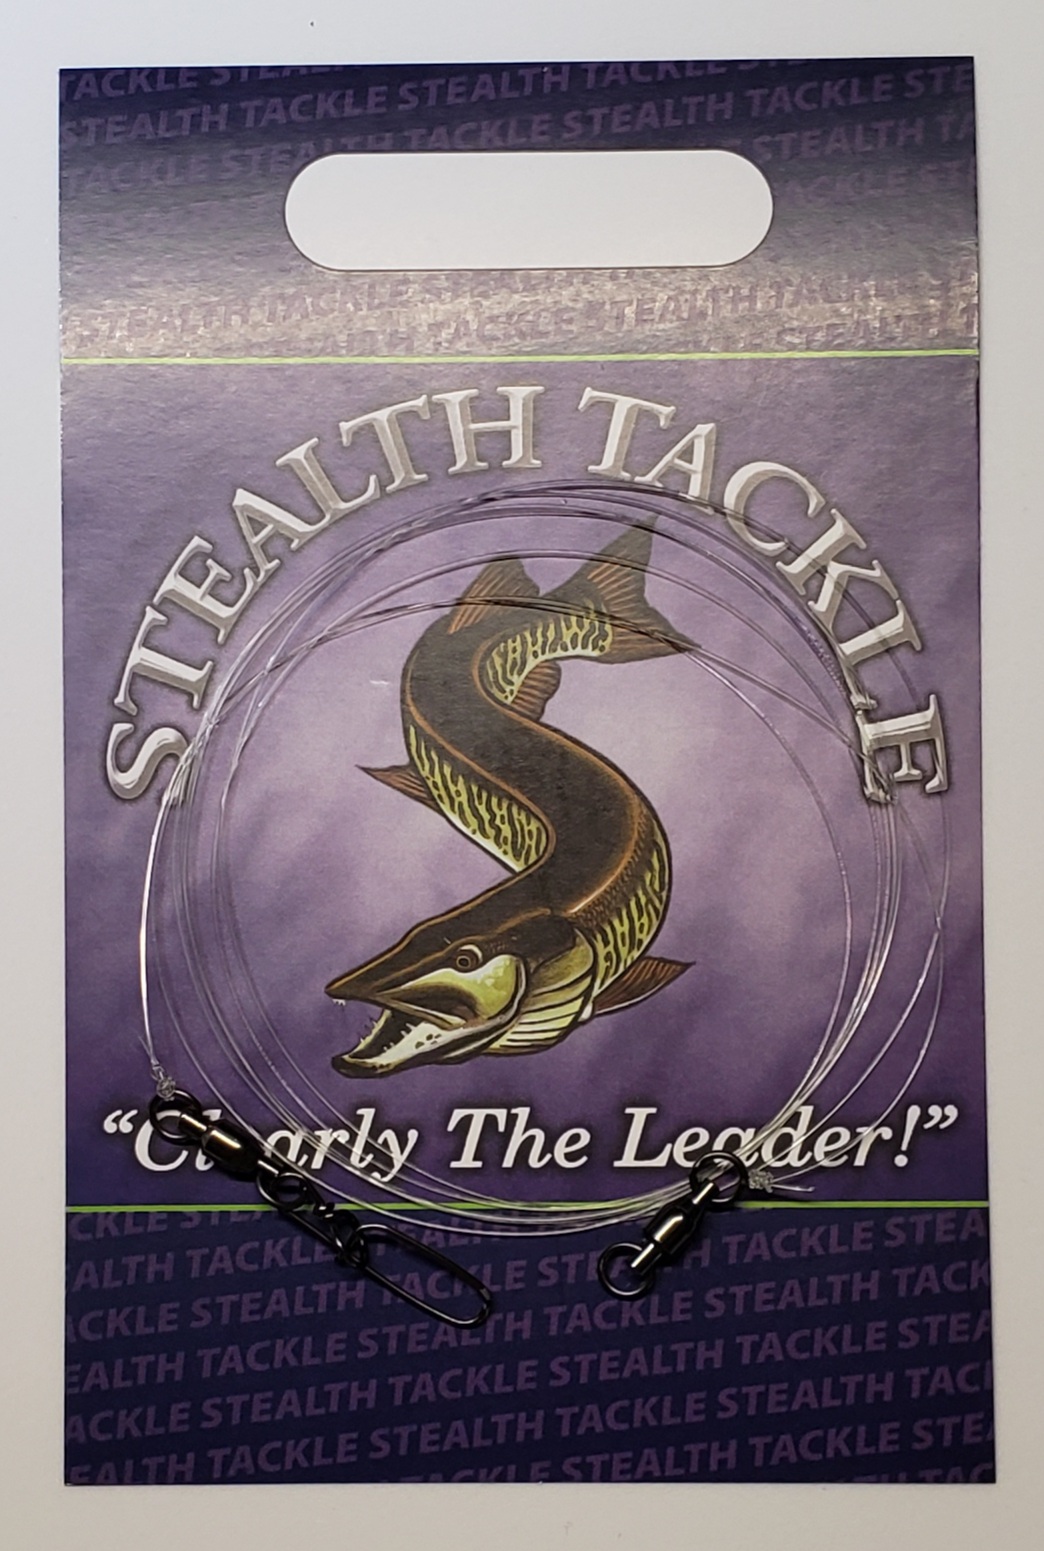 https://www.stealthtackle.net/wp-content/uploads/2021/03/Great-Lakes-Leader.jpg